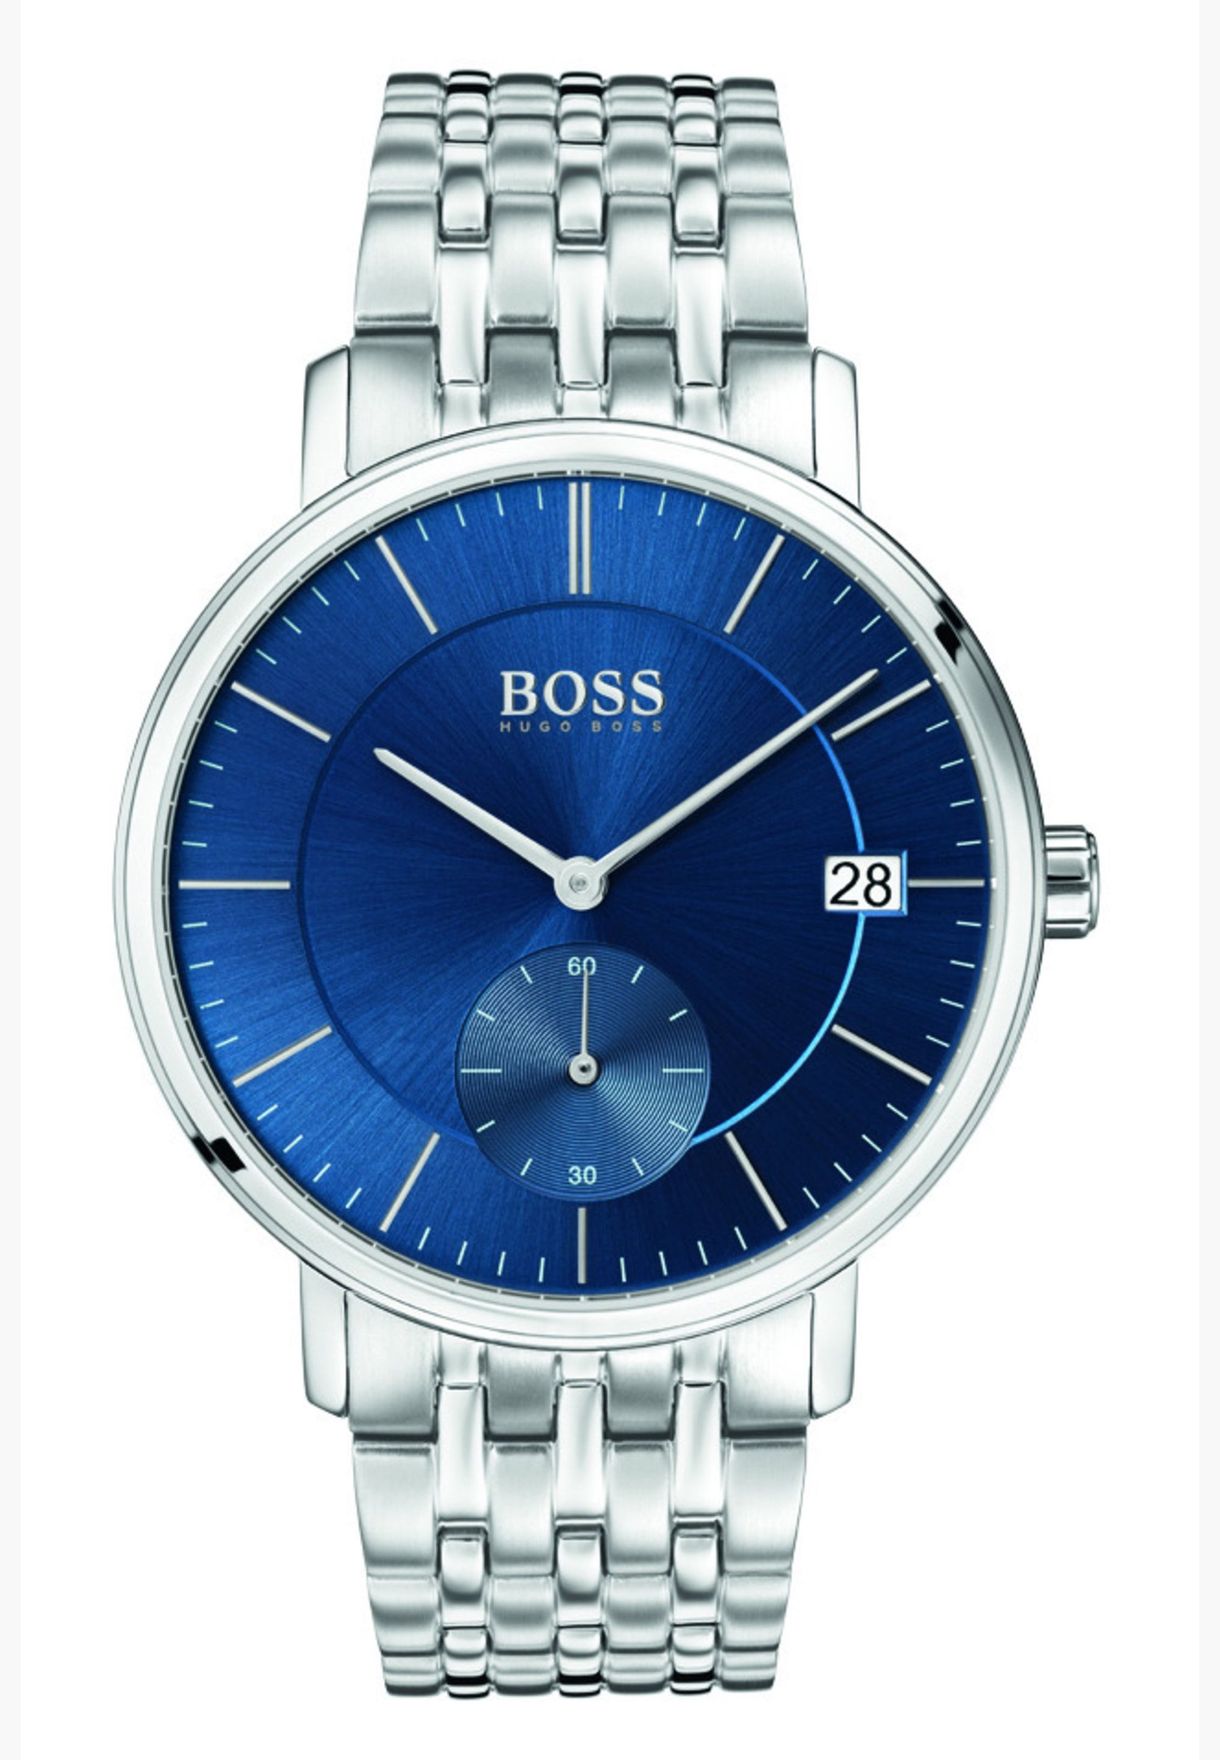 Hugo Boss CORPORAL Steel Strap Watch for Men - 1513642